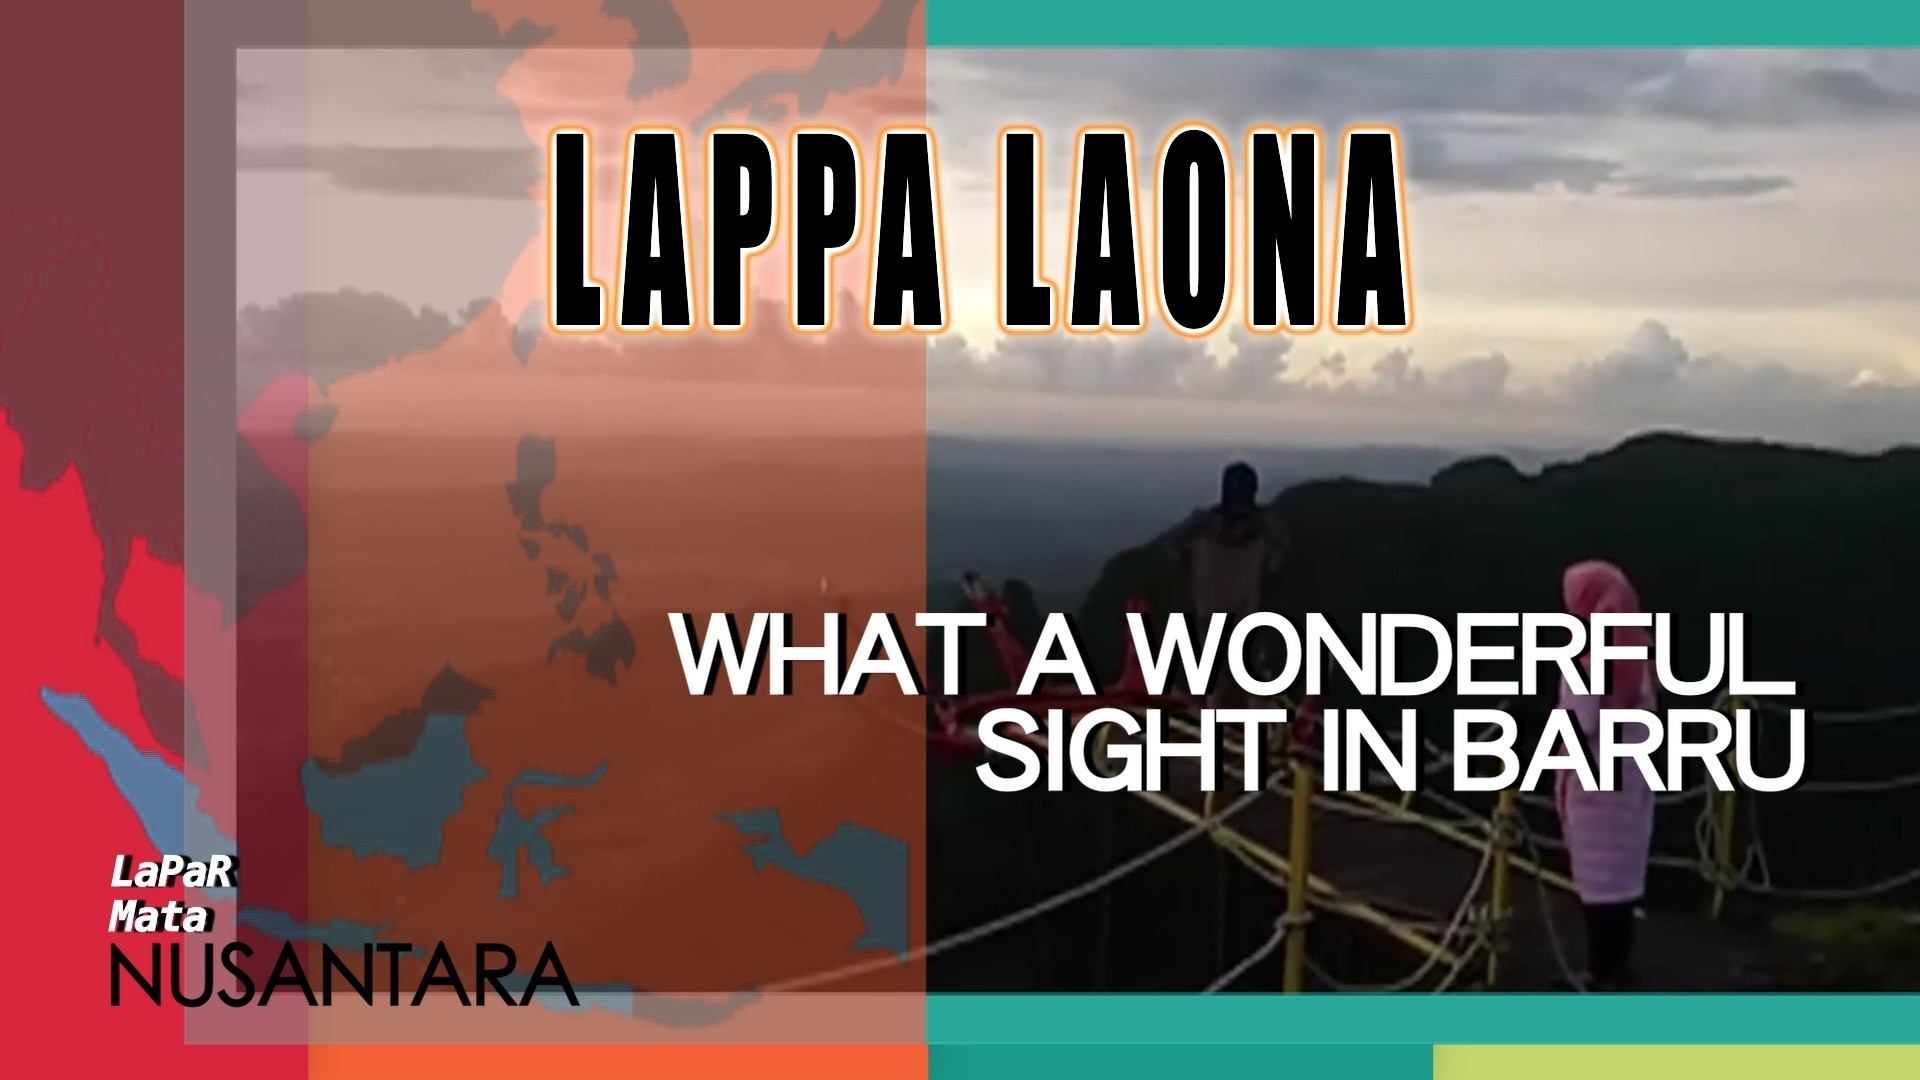 Lappa Laona Wisata Indahnya Panorama Alam Di Kabupaten Barru Sulawesi Selatan Lmnmoa 6dbb88 Jpg